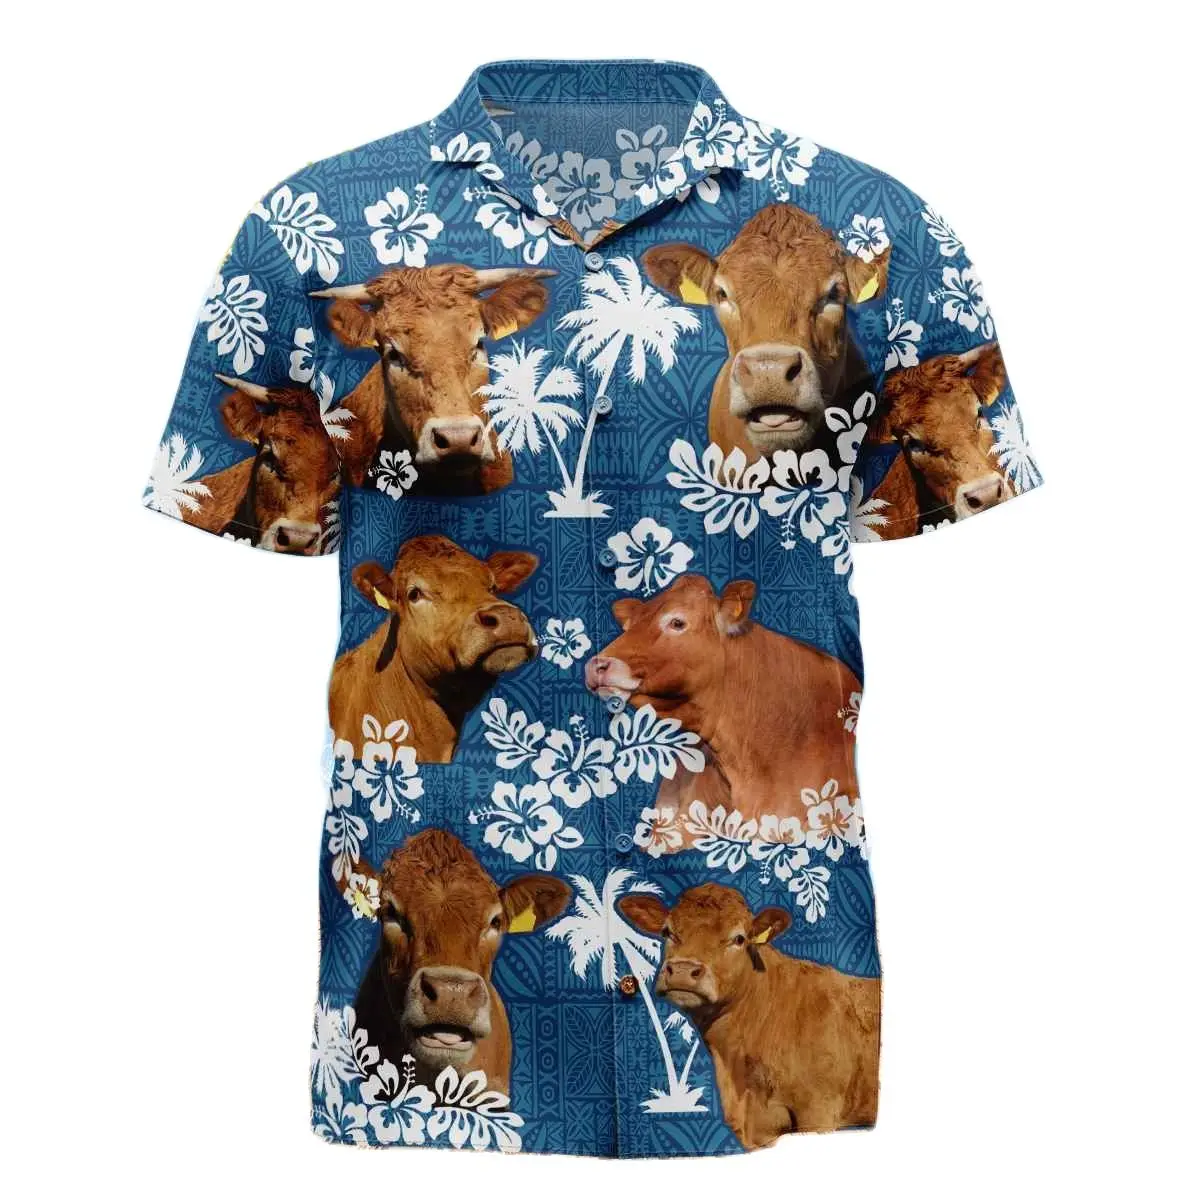 

Jumeast Limousin с крупным рогатого скота синяя племенная Гавайская Мужская рубашка унисекс мешковатая симпатичная ферма корова Пальма пляжная блузка винтажная одежда 90-х